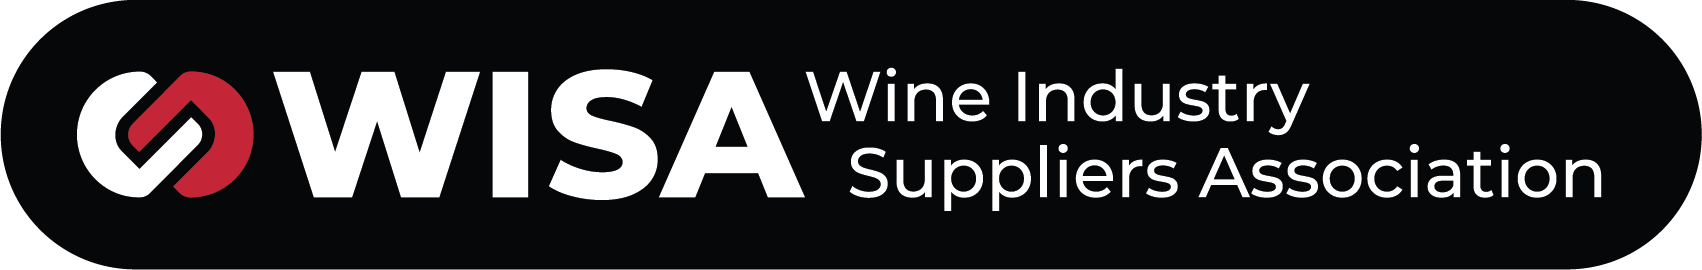 WISA - Wine Industry Suppliers Association